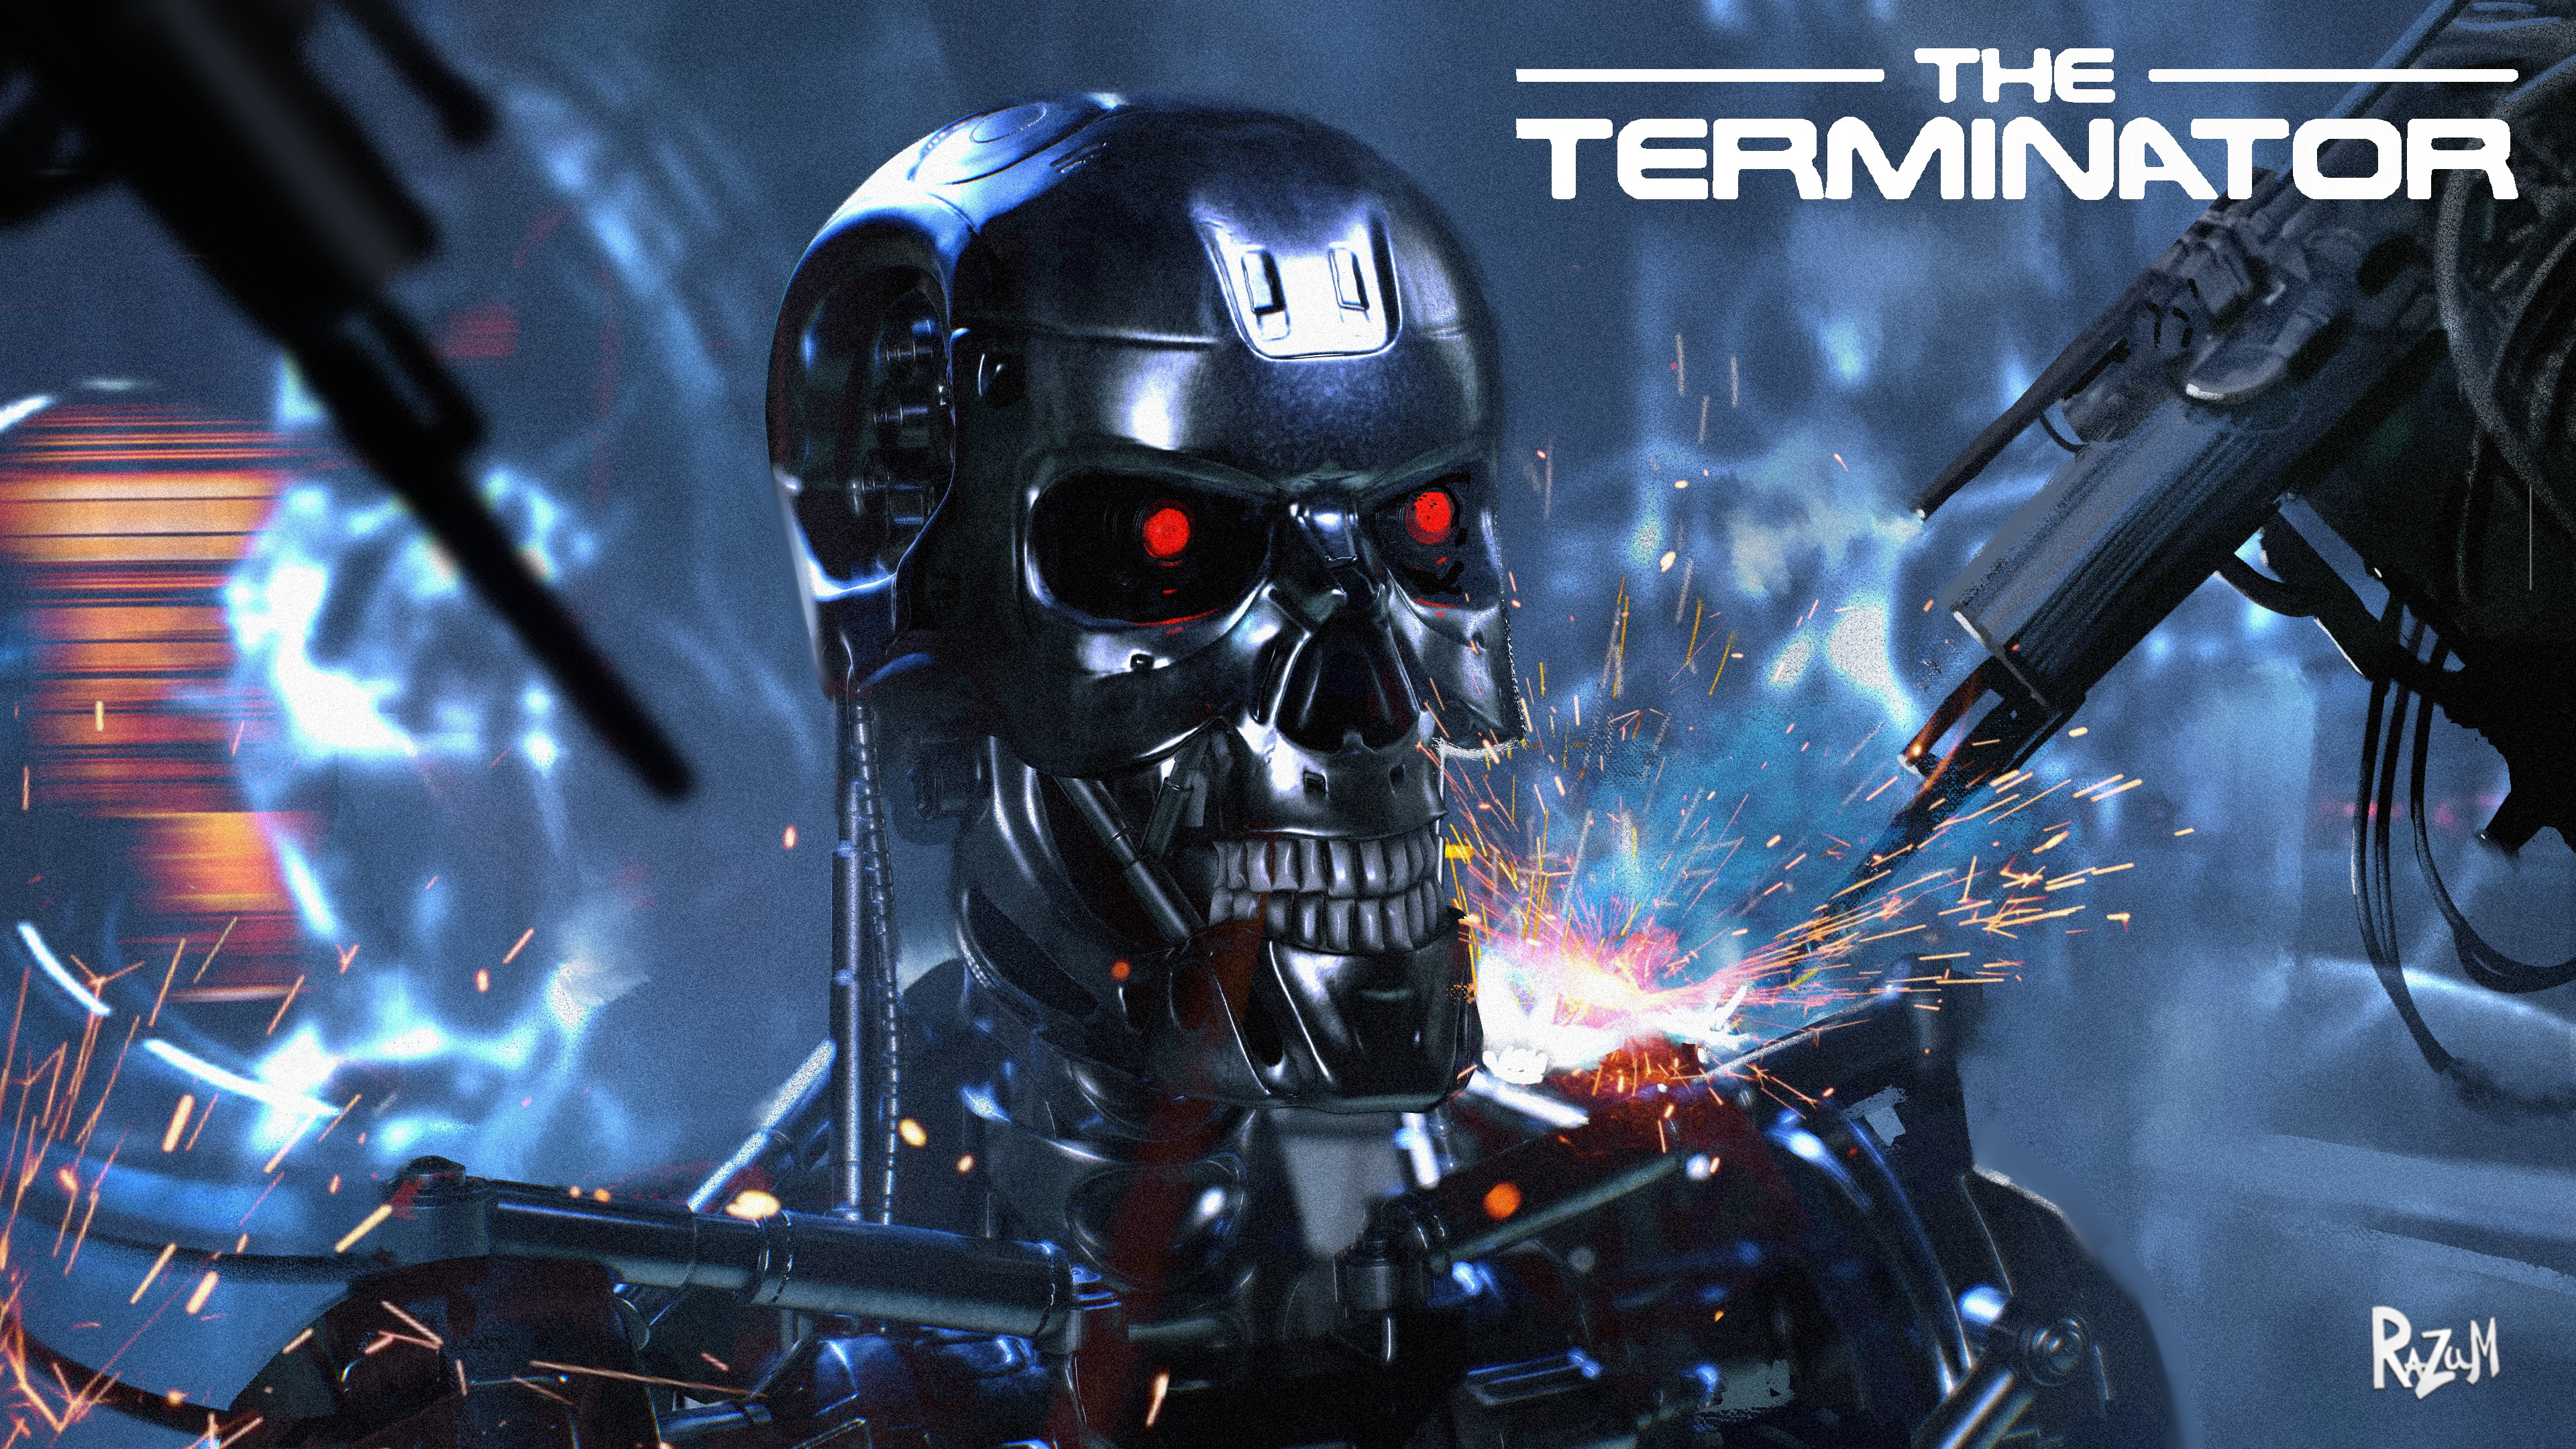 Terminator peliculas orden